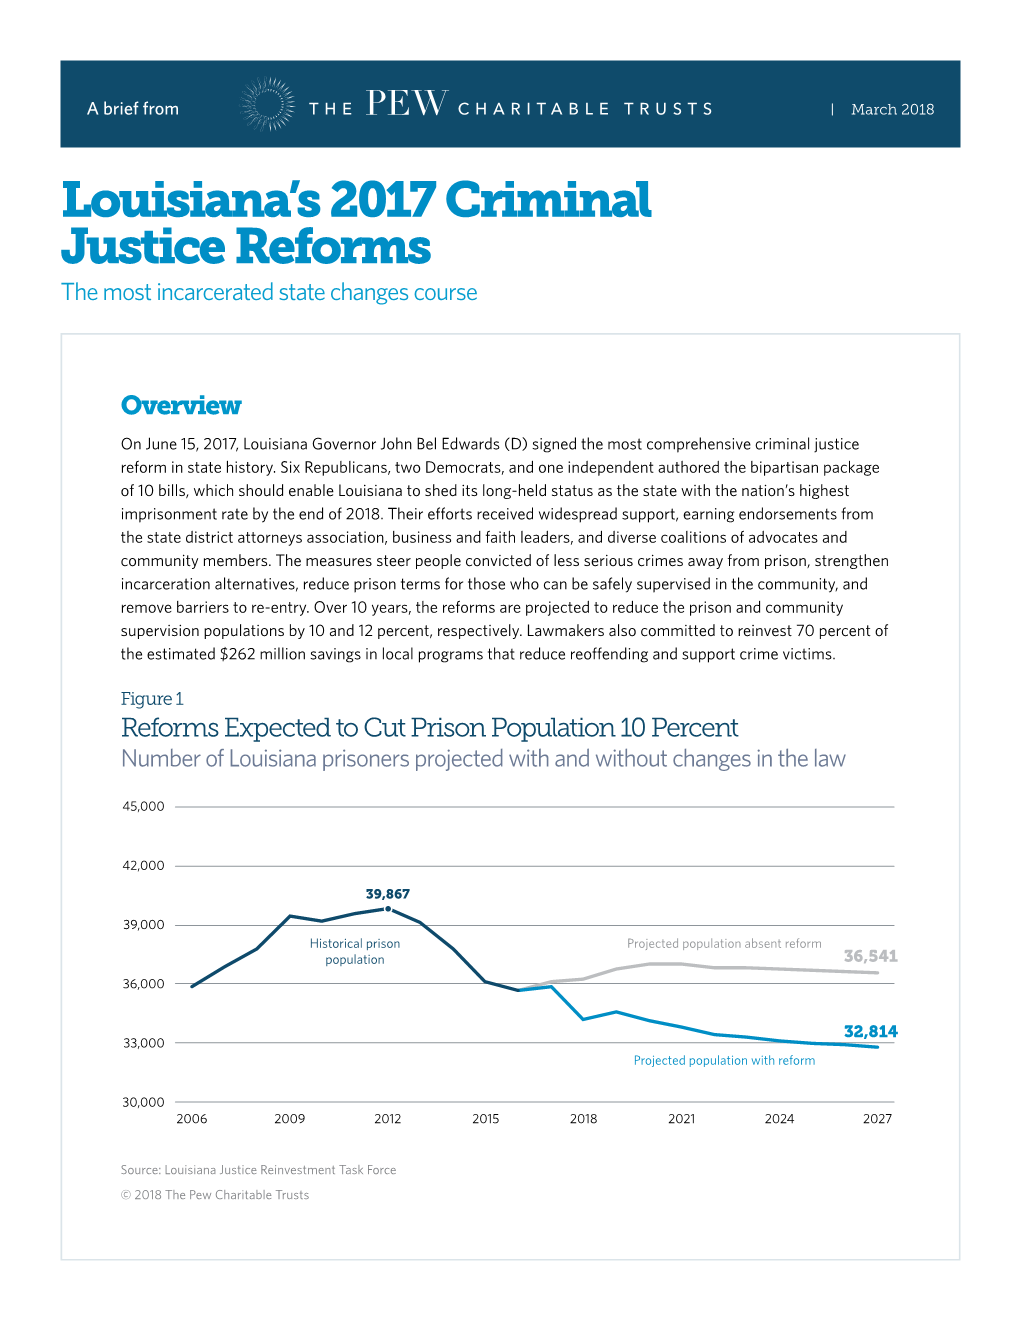 Louisiana's 2017 Criminal Justice Reforms